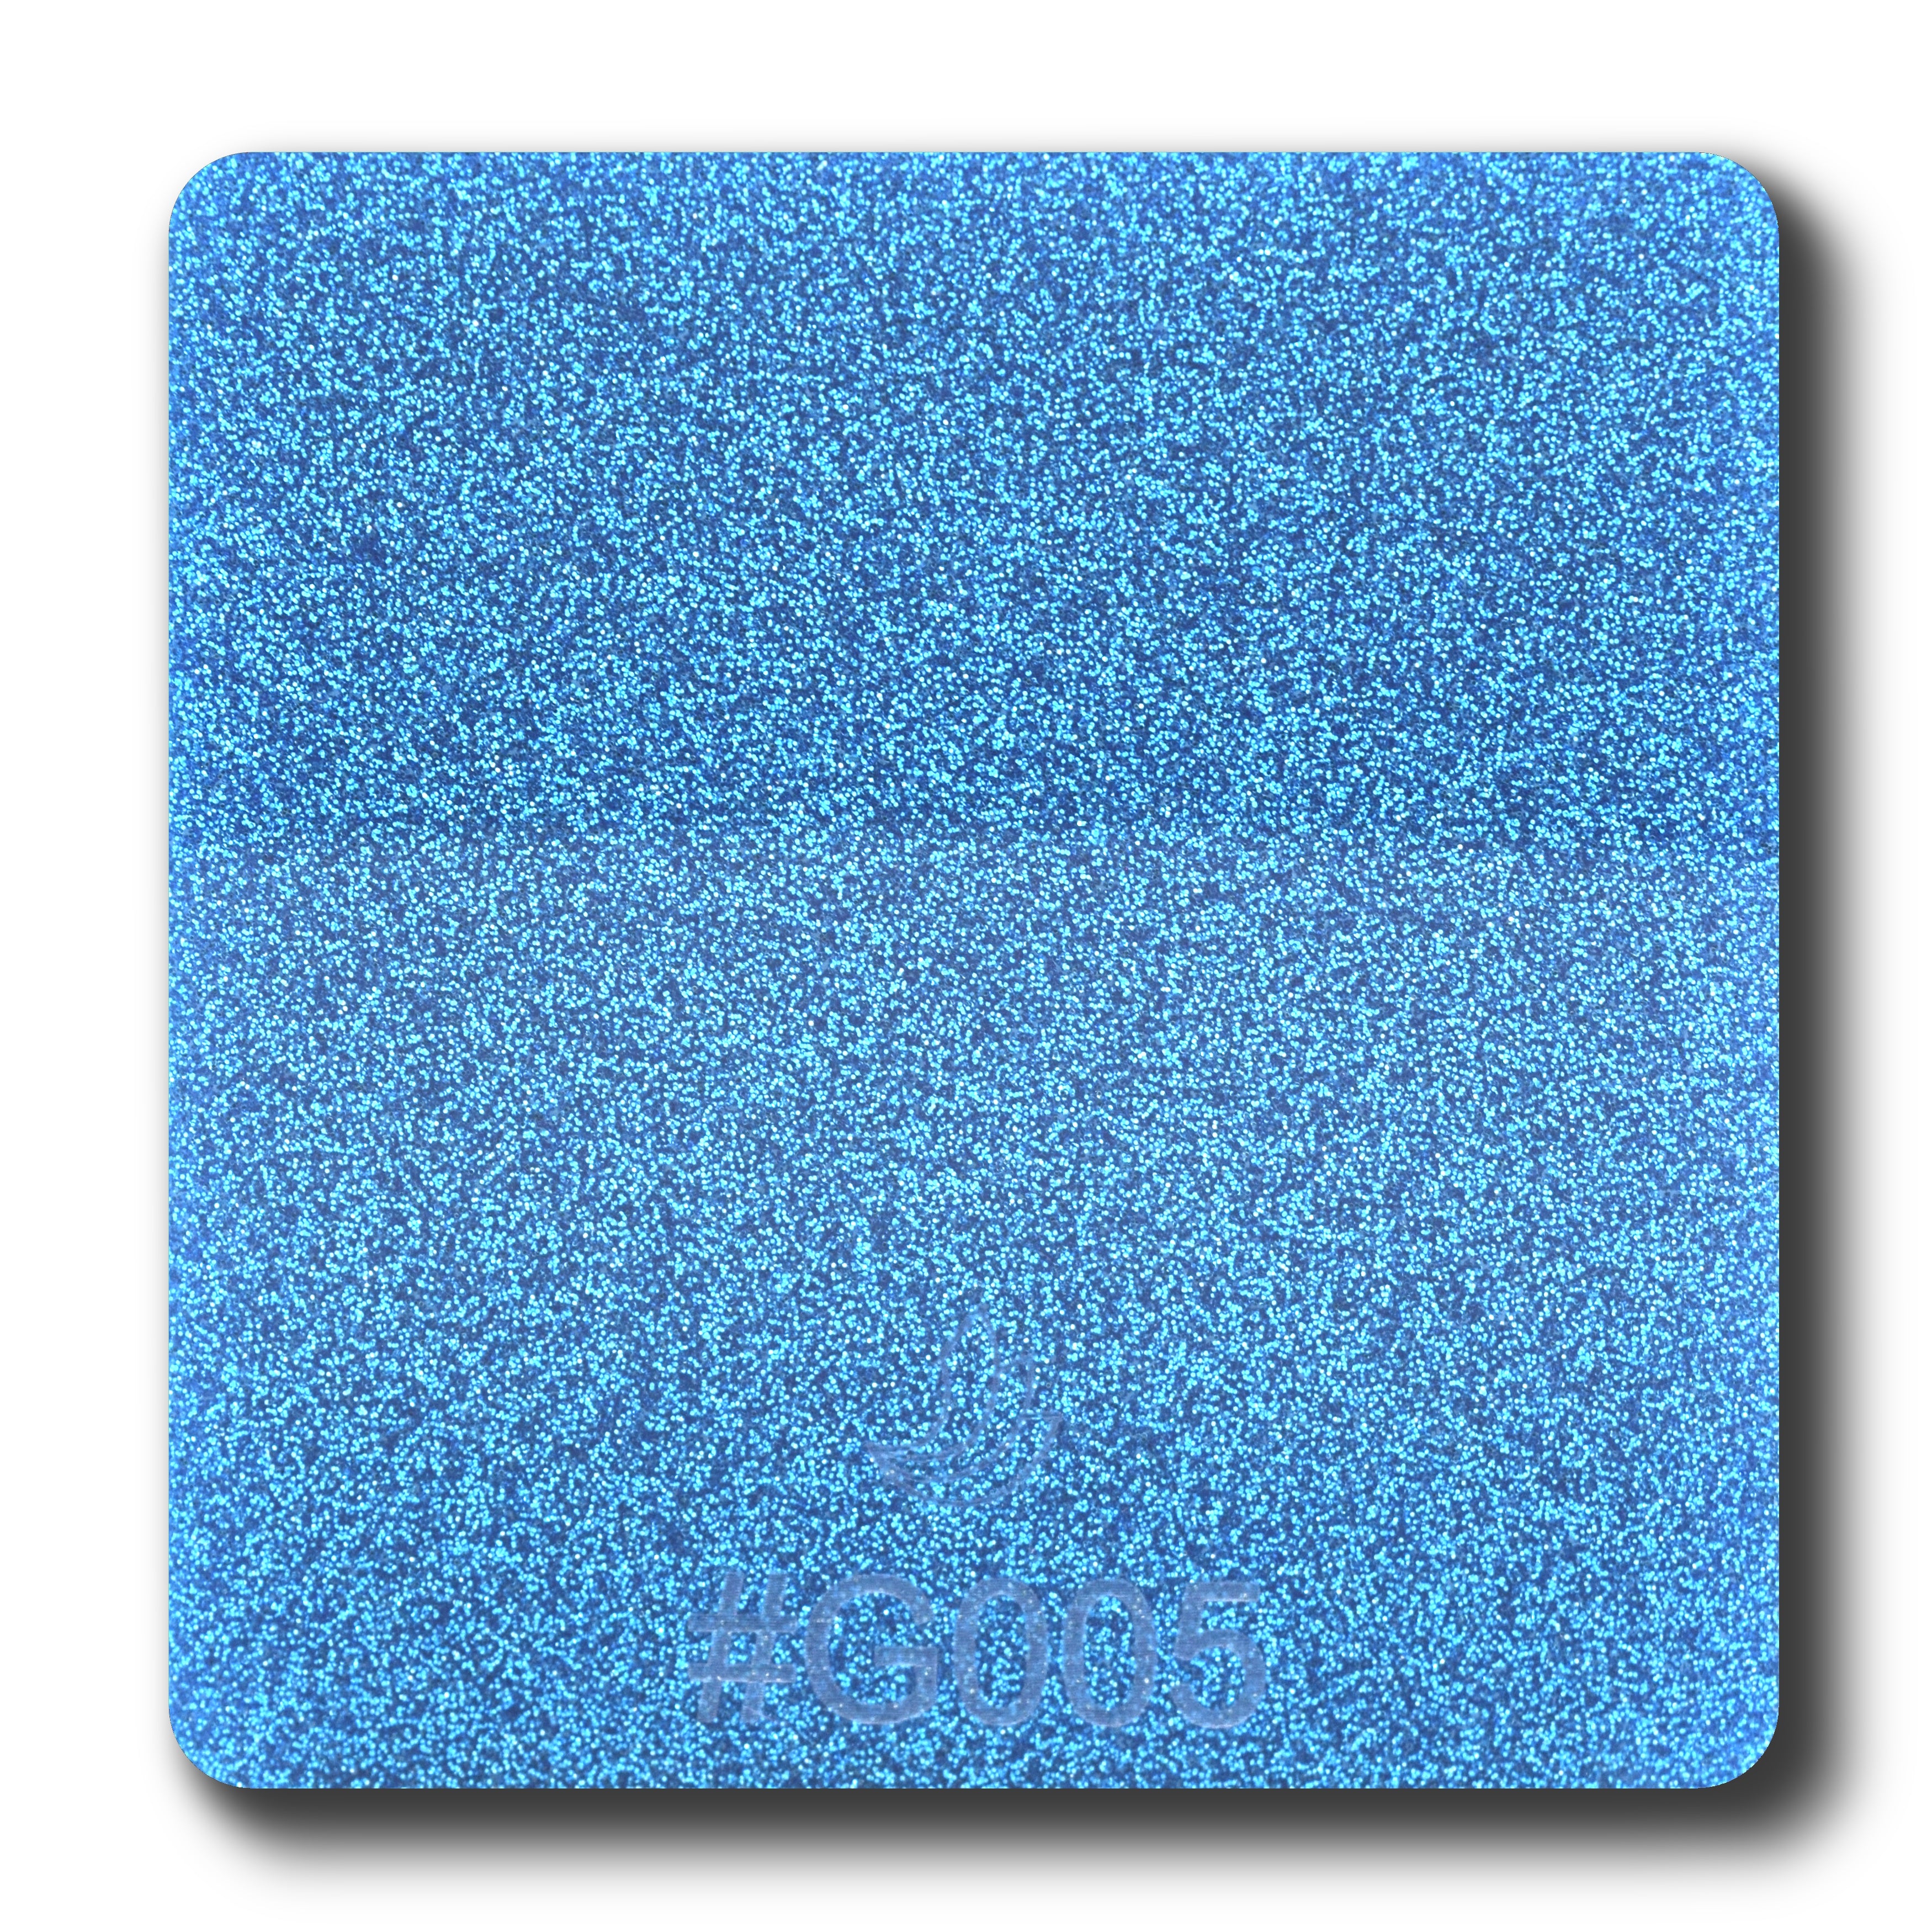 1/8" Light Blue Glitter Two-Sided Acrylic Sheet